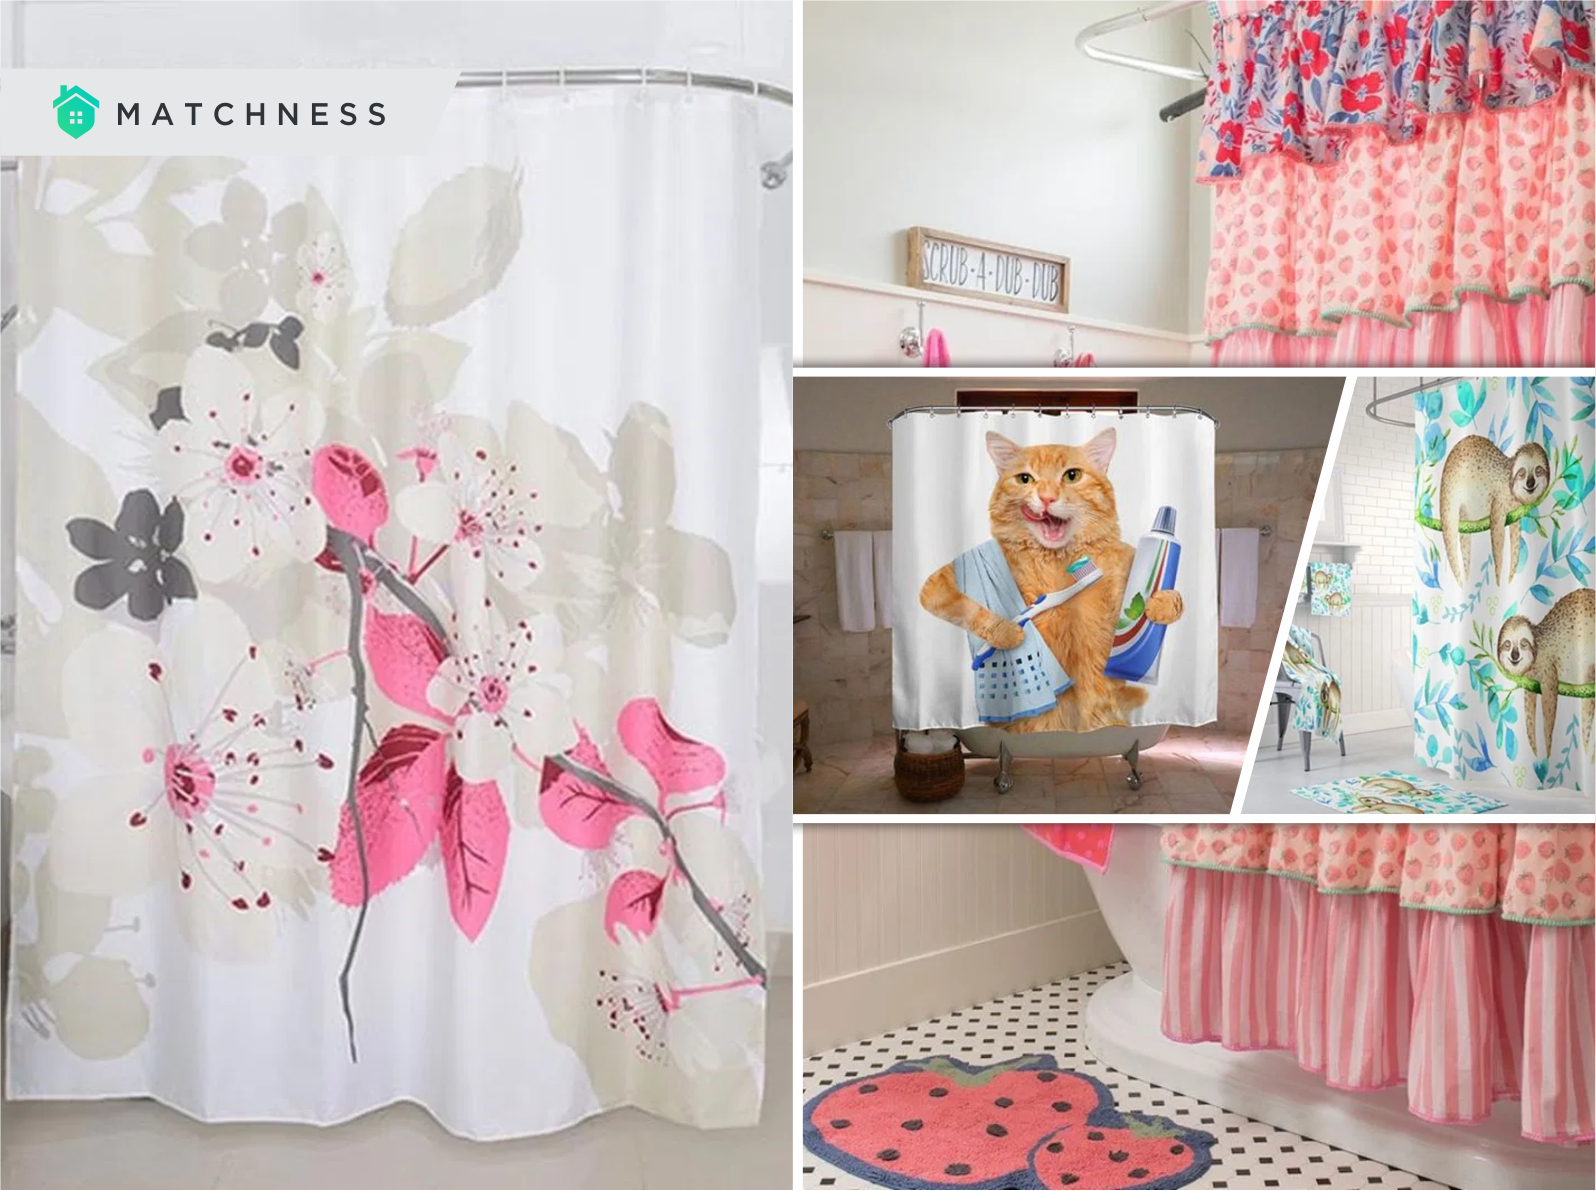 Details about   Kids Shower Curtain Cute Autumn Garden Daisies Print for Bathroom